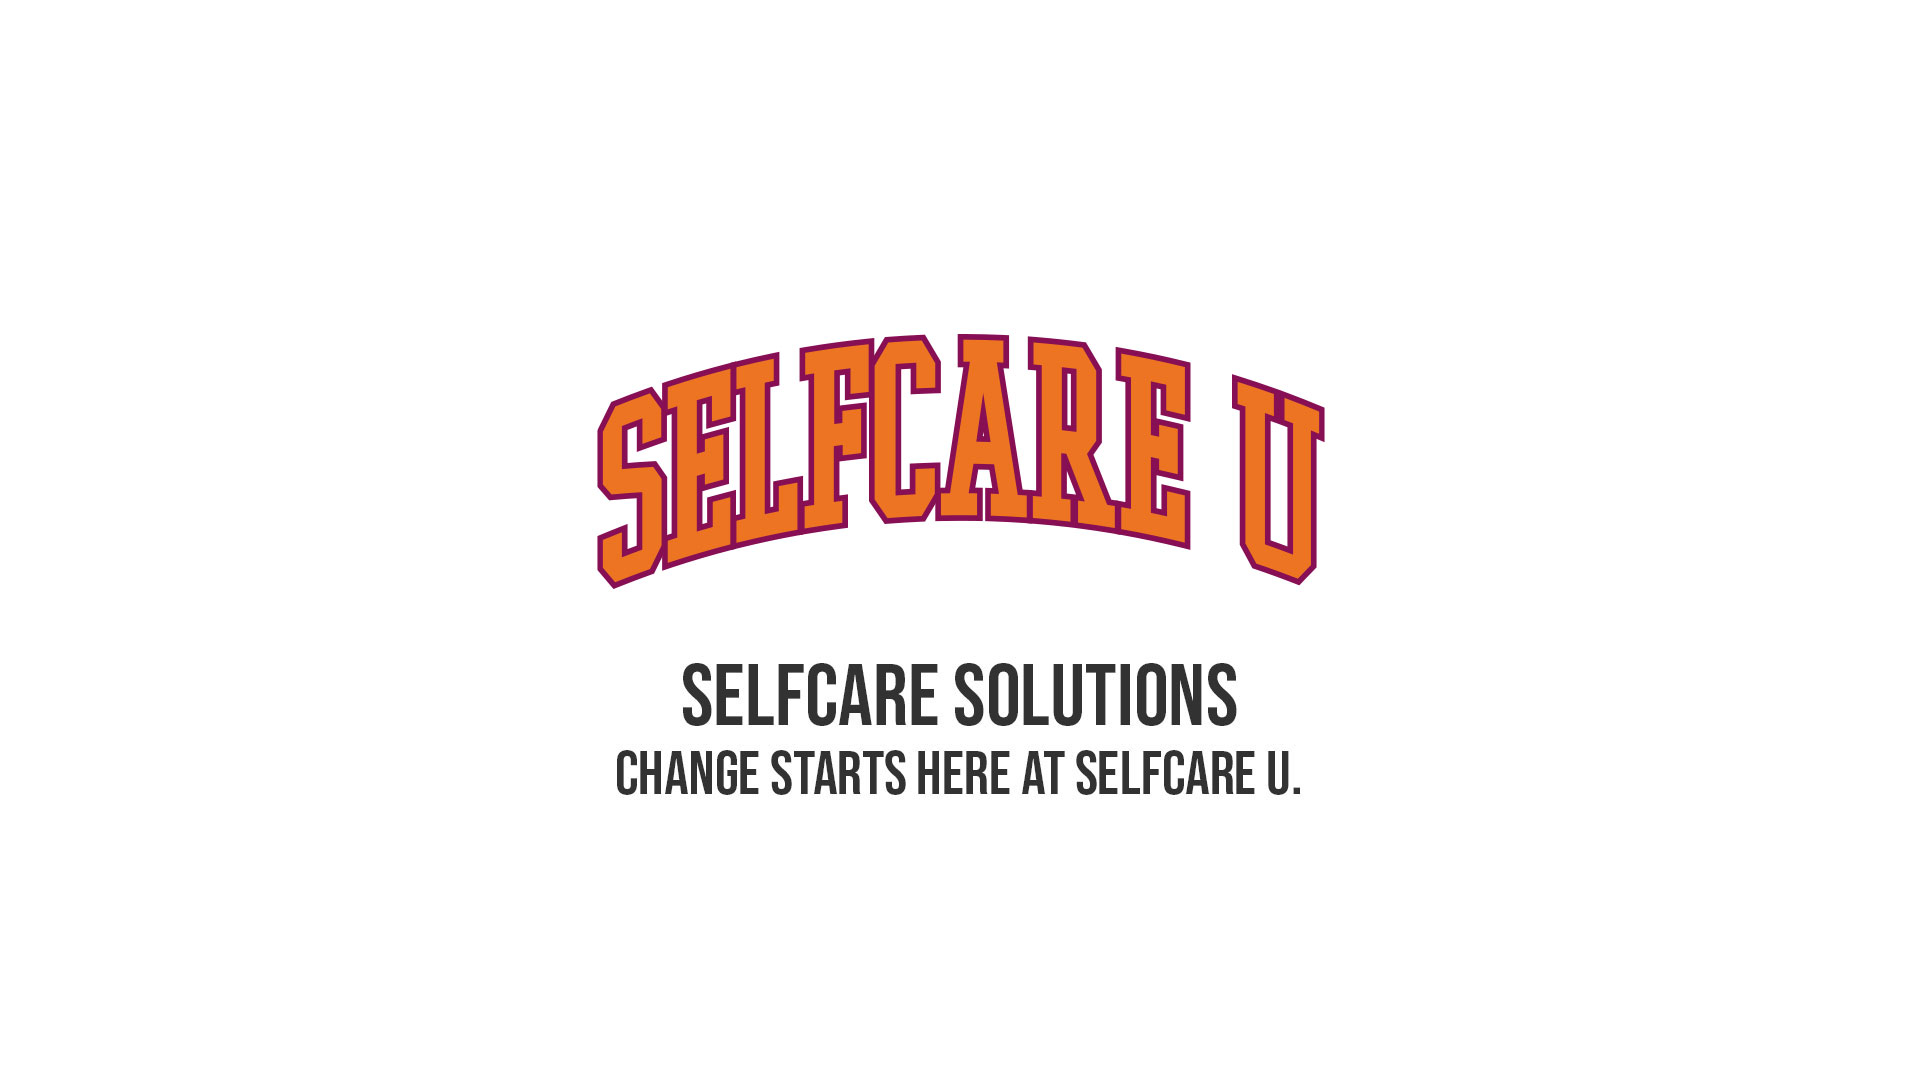 Selfcare U Selfcare Solutions Change starts here at SelfCare U